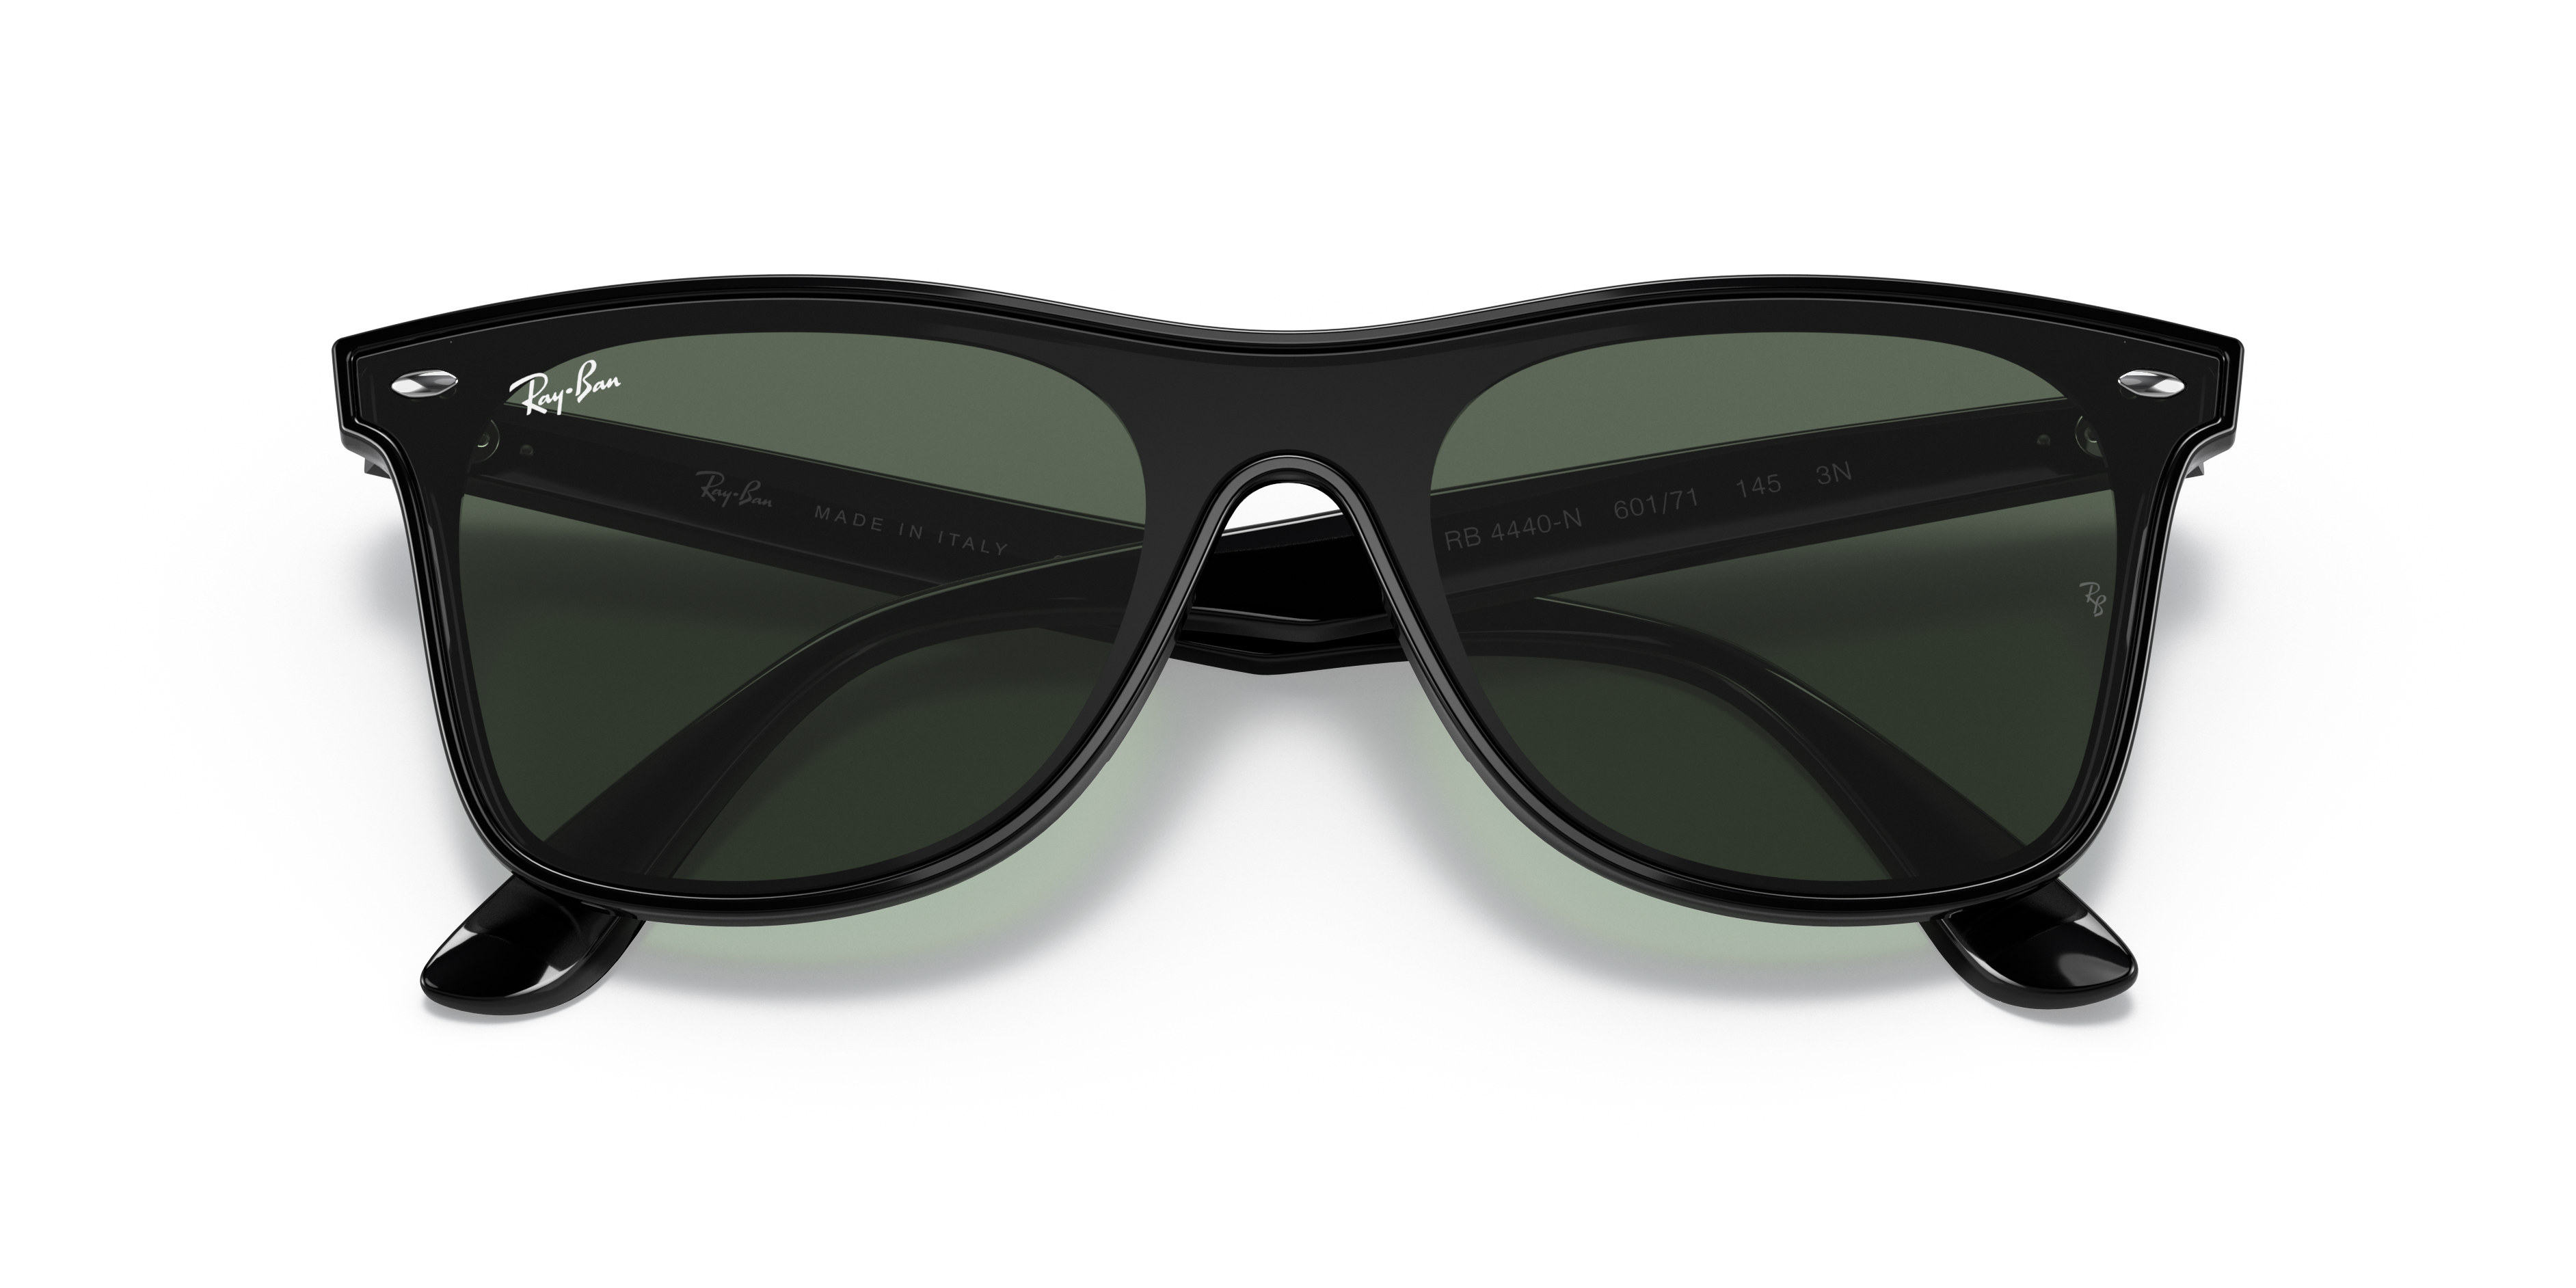 Blaze Wayfarer Sunglasses in Black and Green | Ray-Ban®